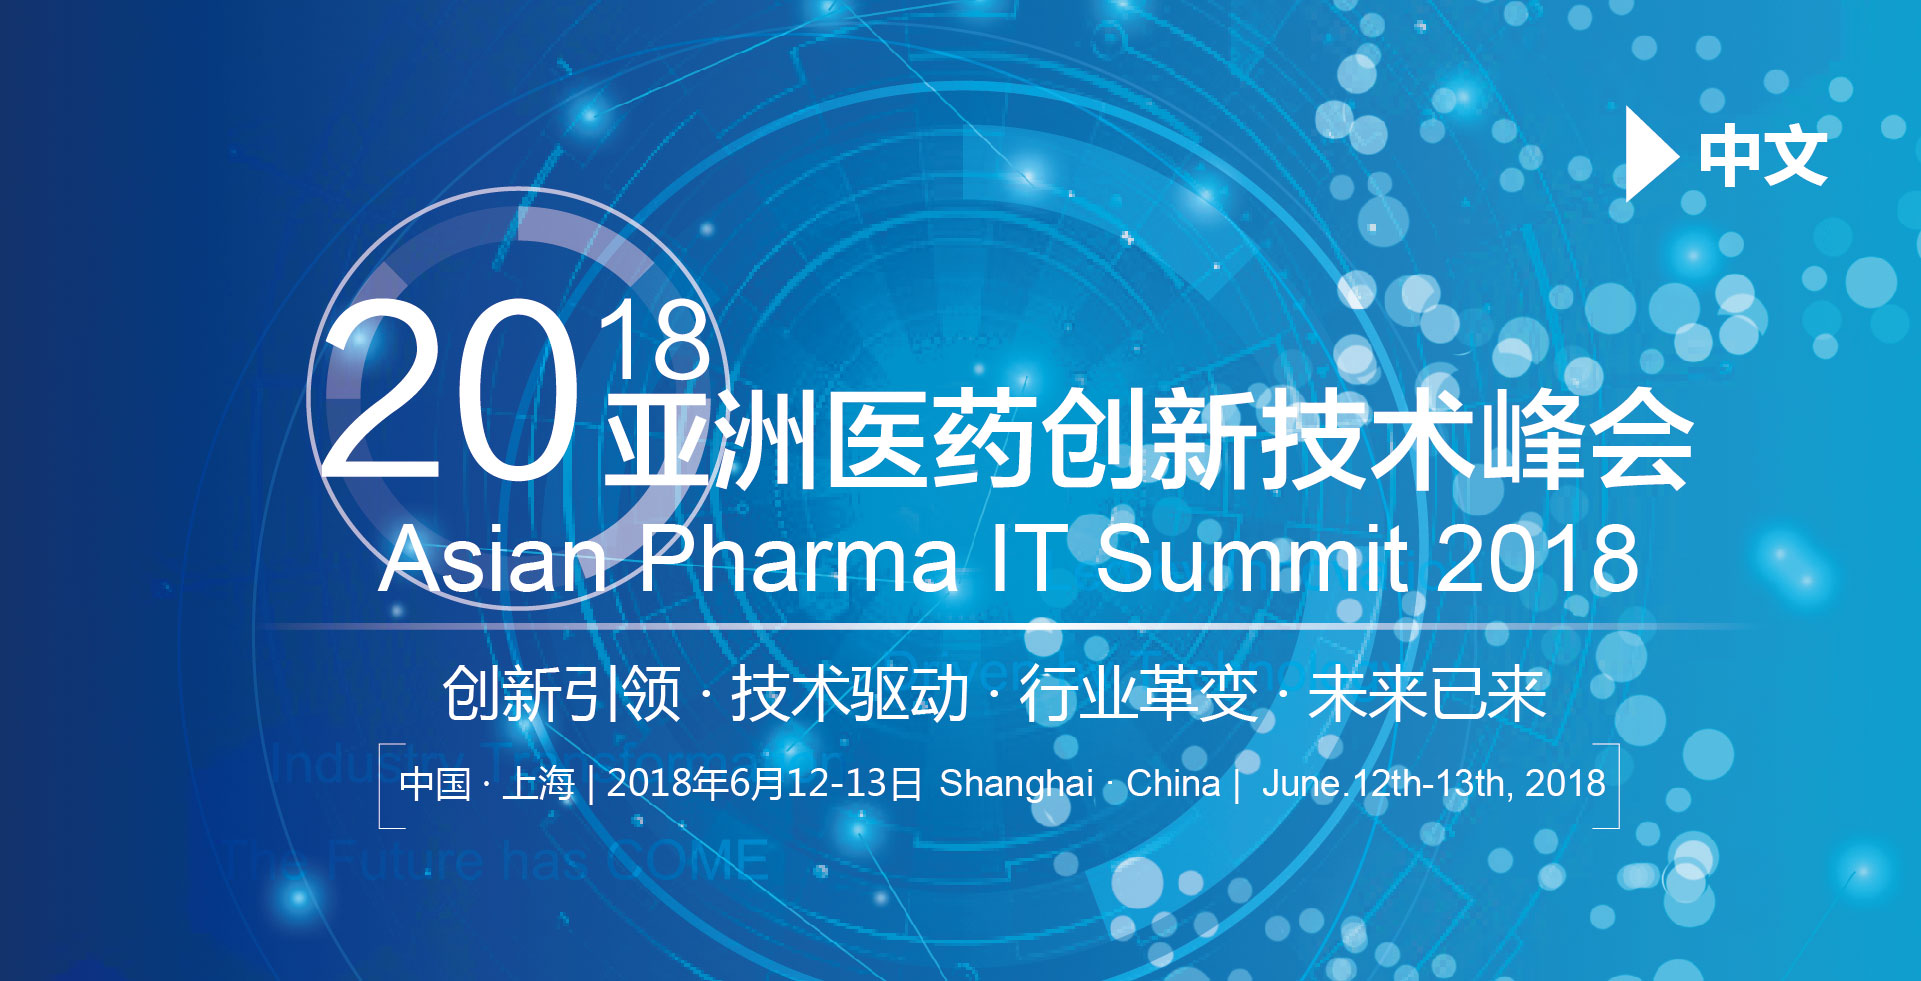 Asian Pharma IT Summit 2018